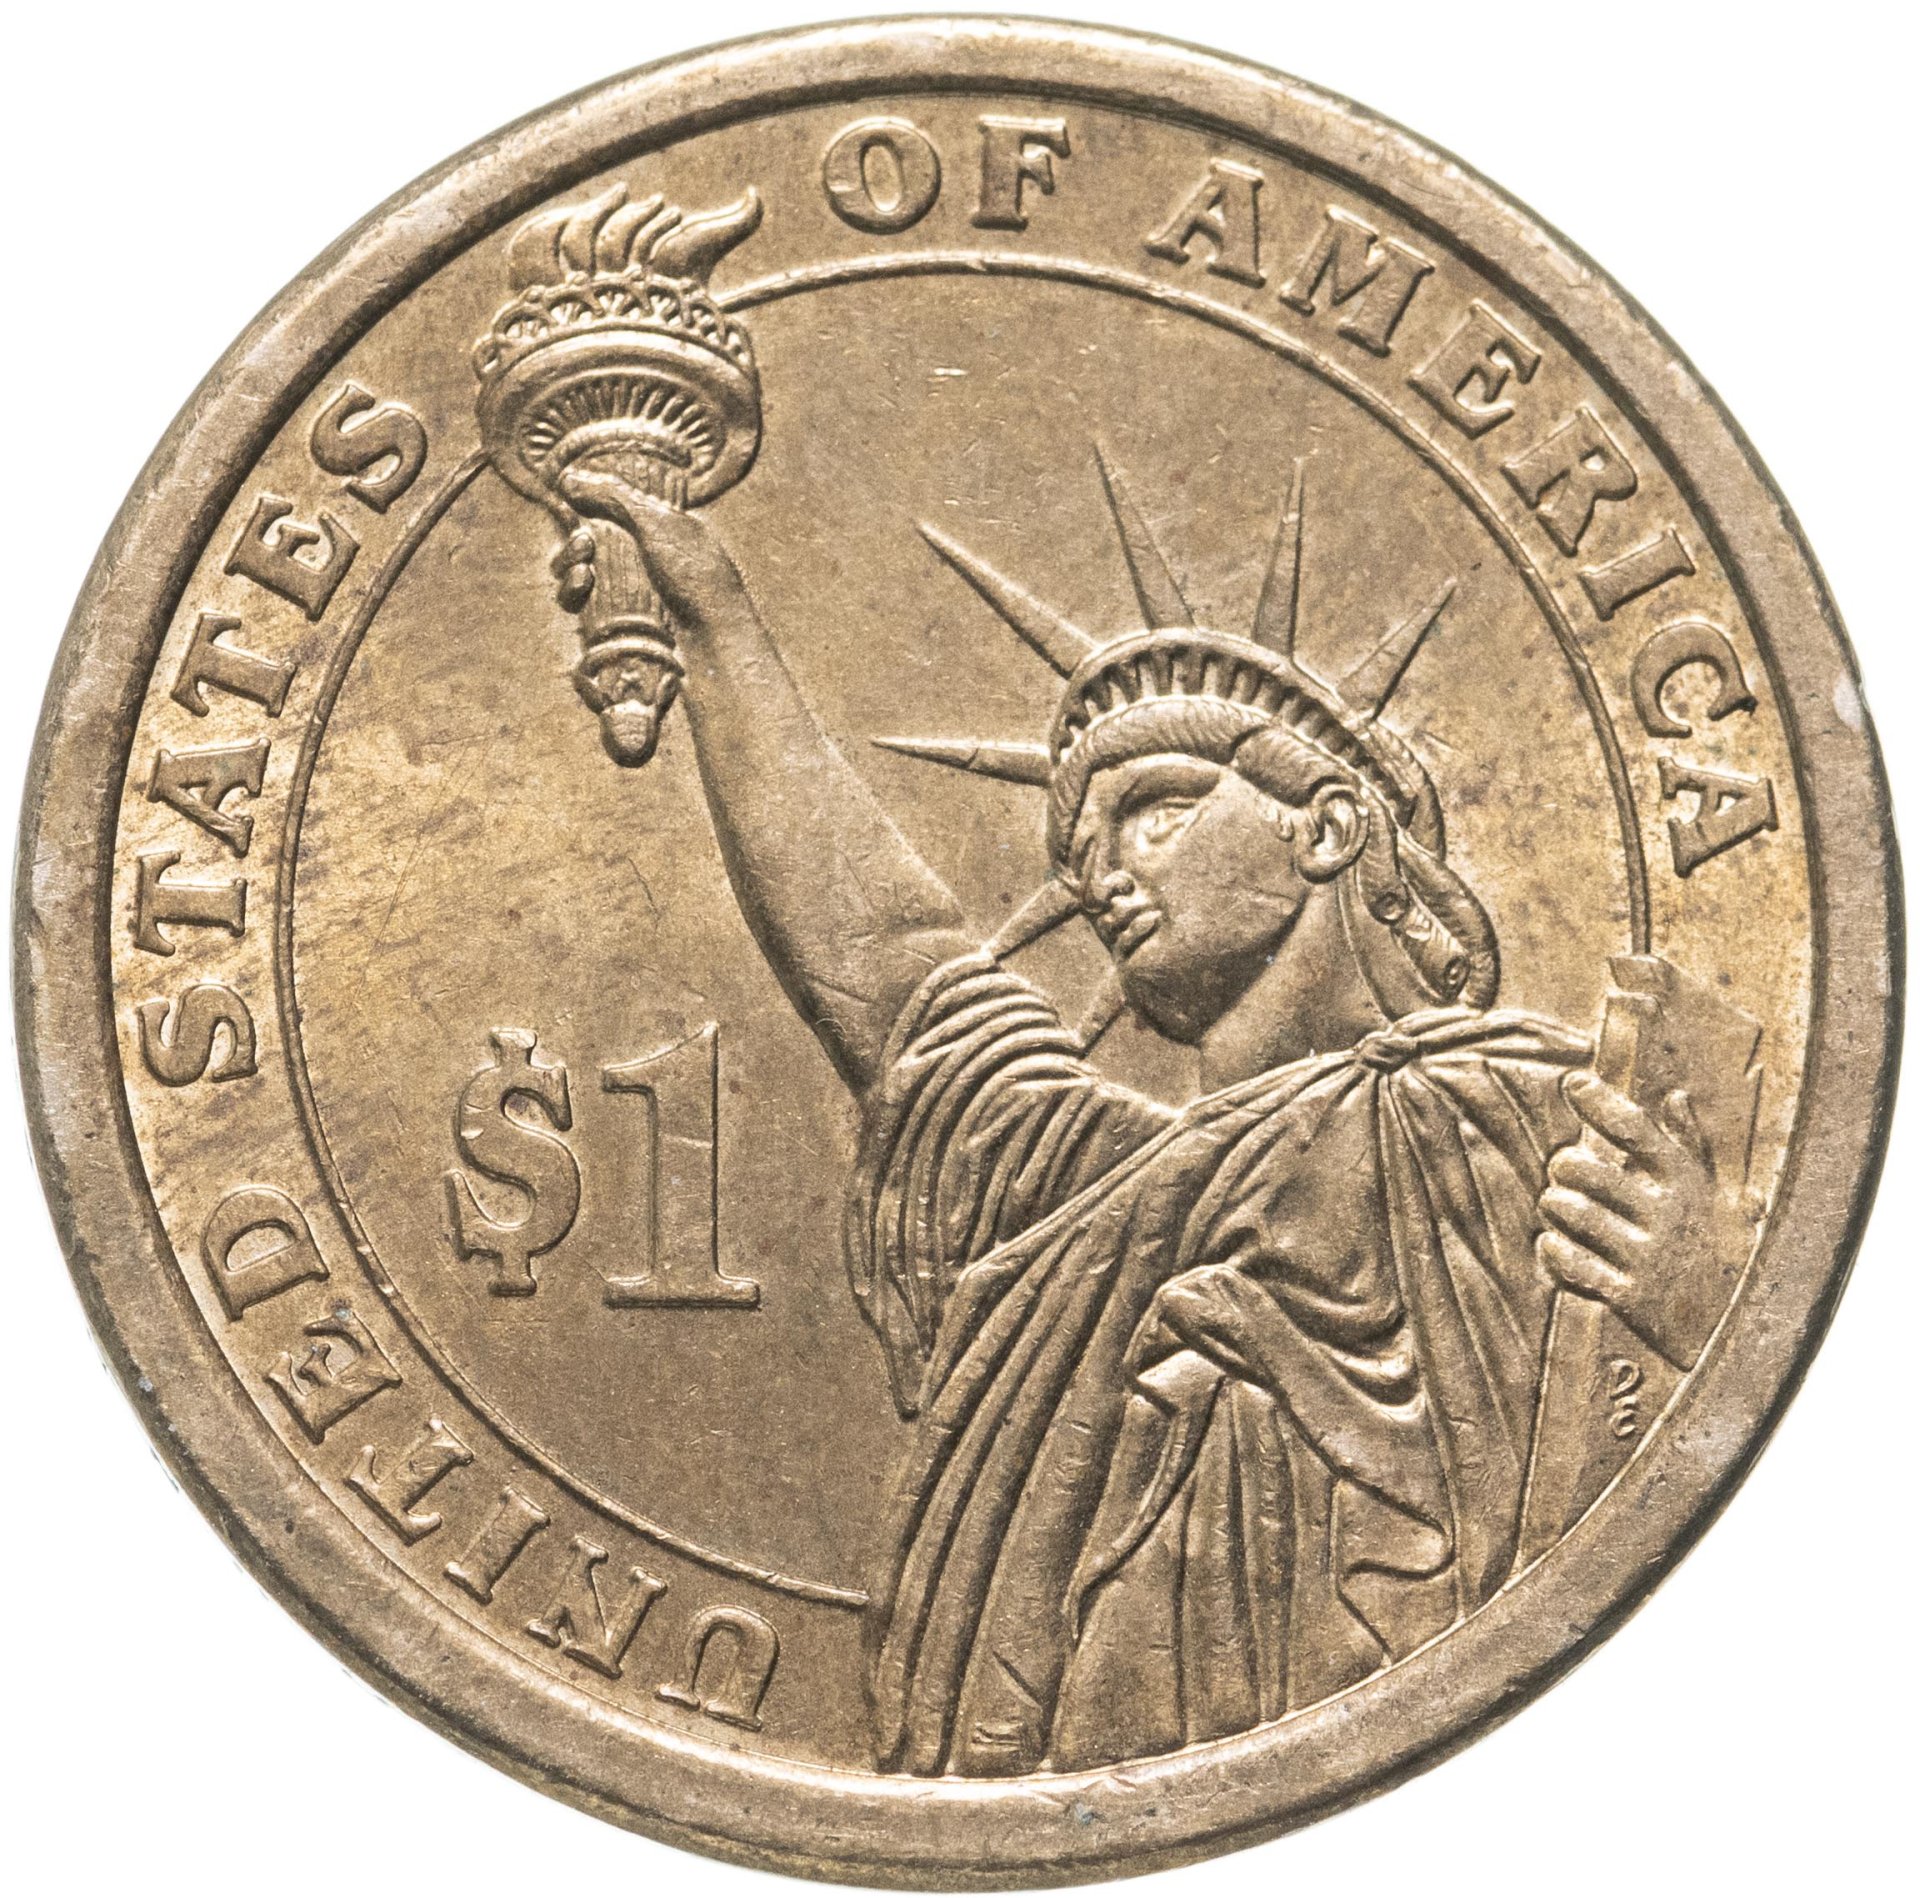 Купить монеты доллары сша. Уоррен Гардинг 1 доллар. Доллар монета. Американский доллар монета. Монета номиналом 1 доллар.